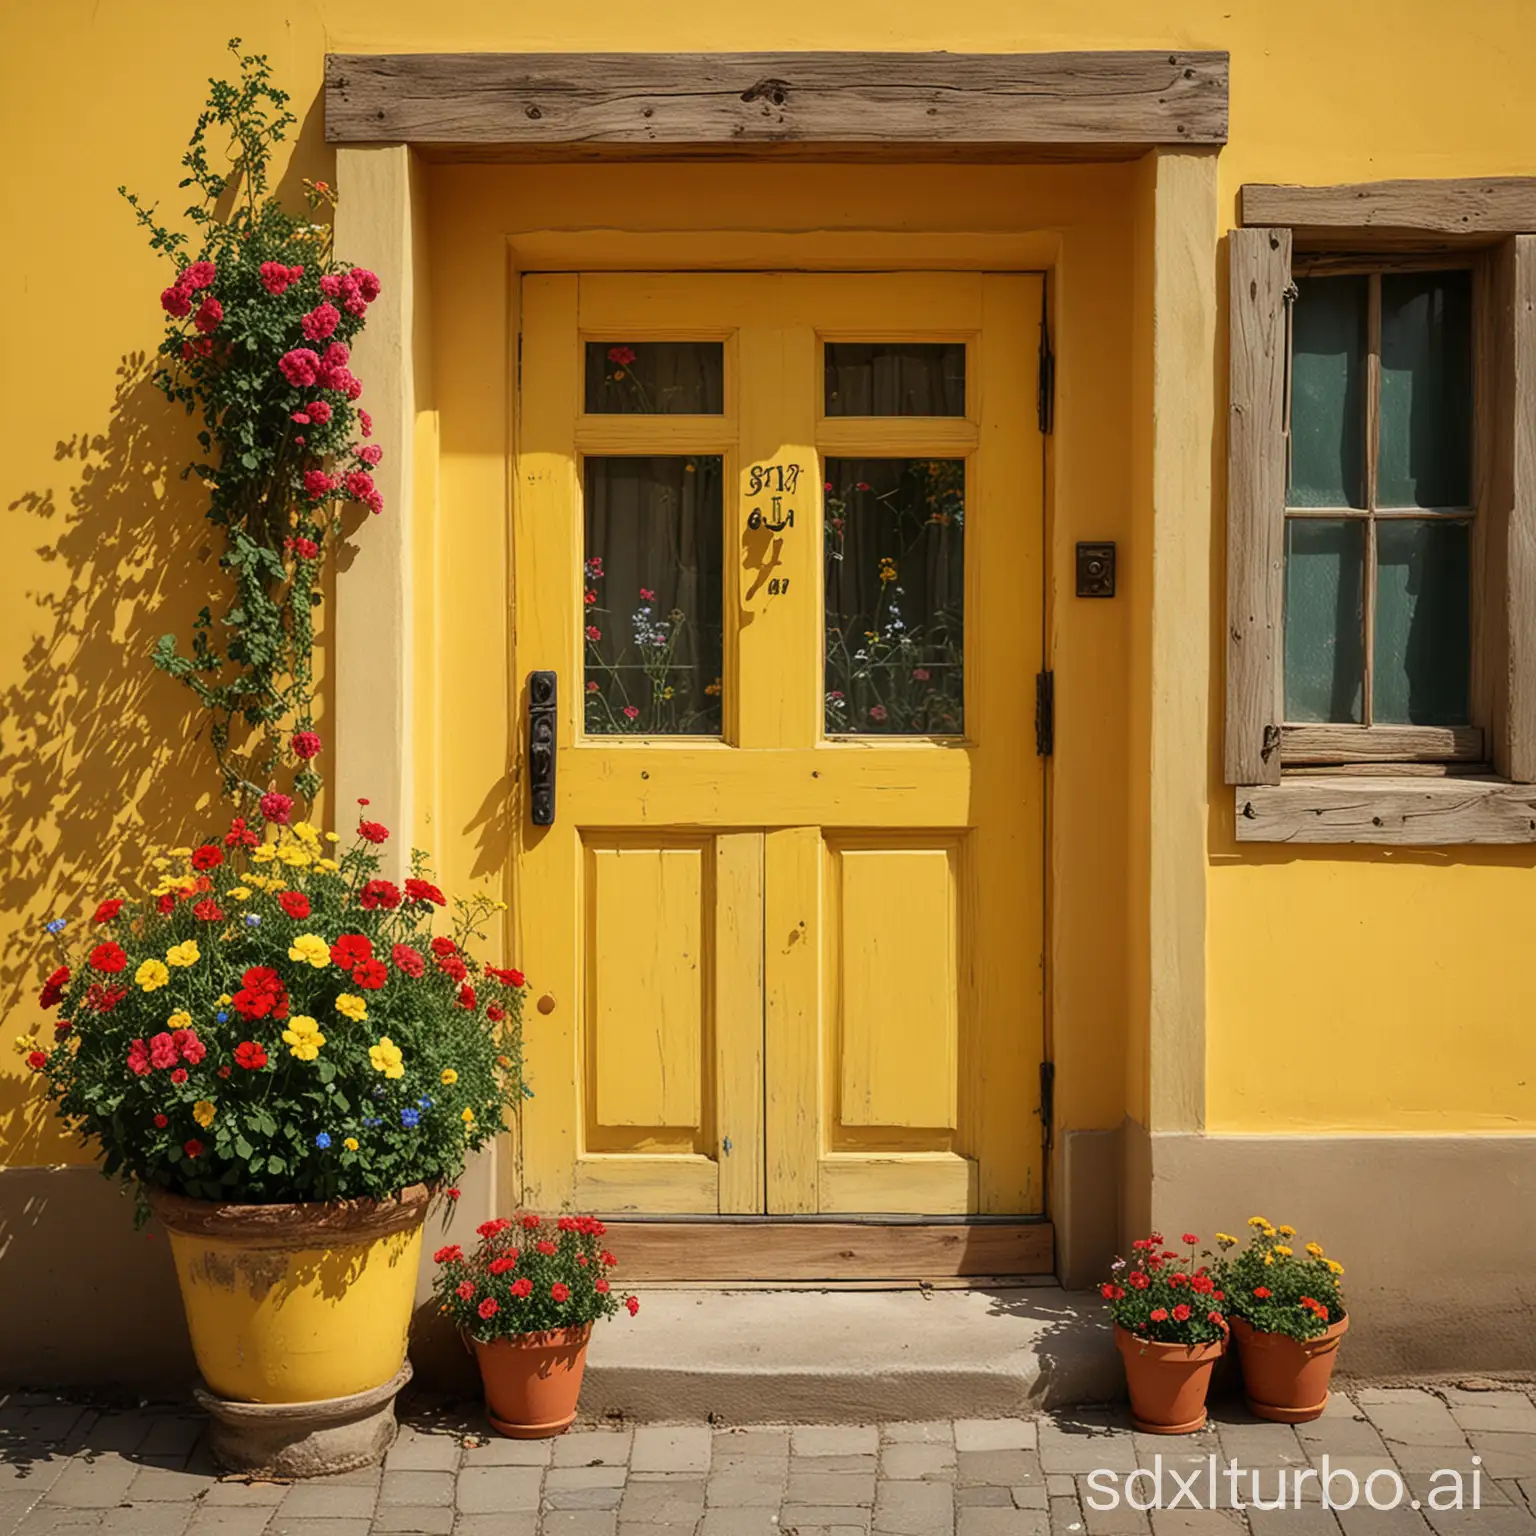 Nostalgic-Yellow-Door-with-Colorful-Flowers-Childhood-Memory-Scene